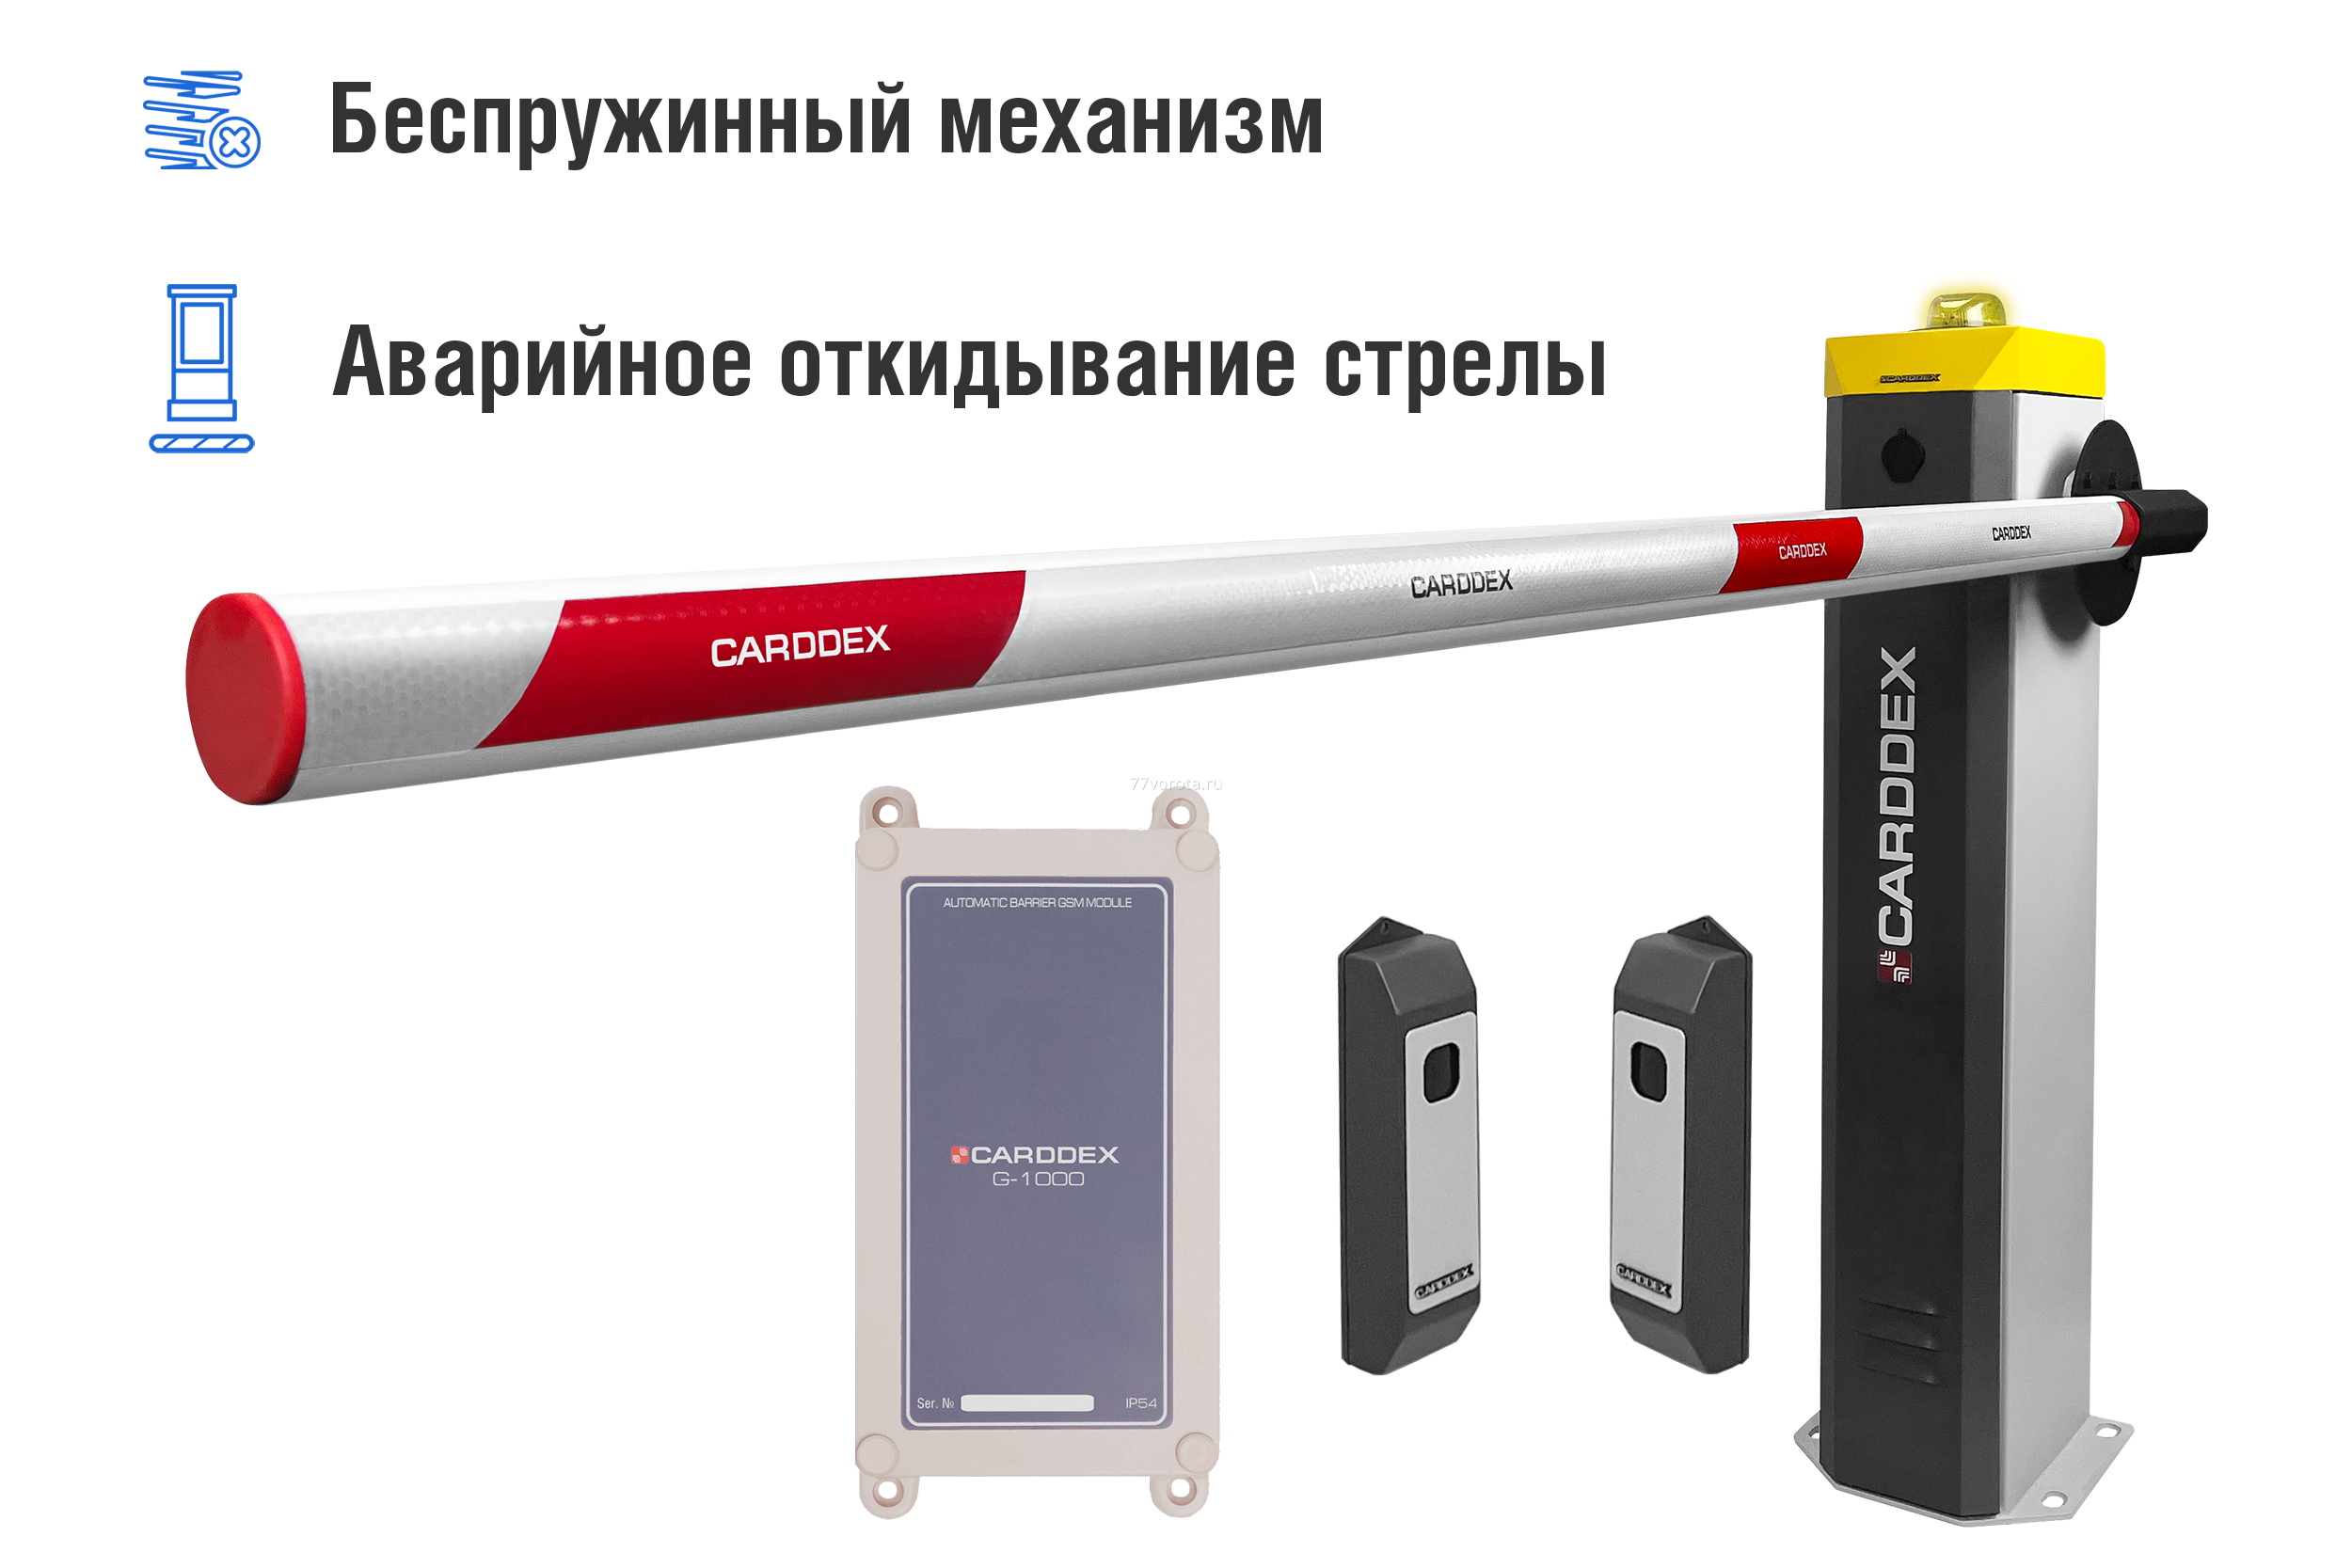 Автоматический шлагбаум CARDDEX «RBS-L», комплект «Оптимум GSM-L» - фото 1